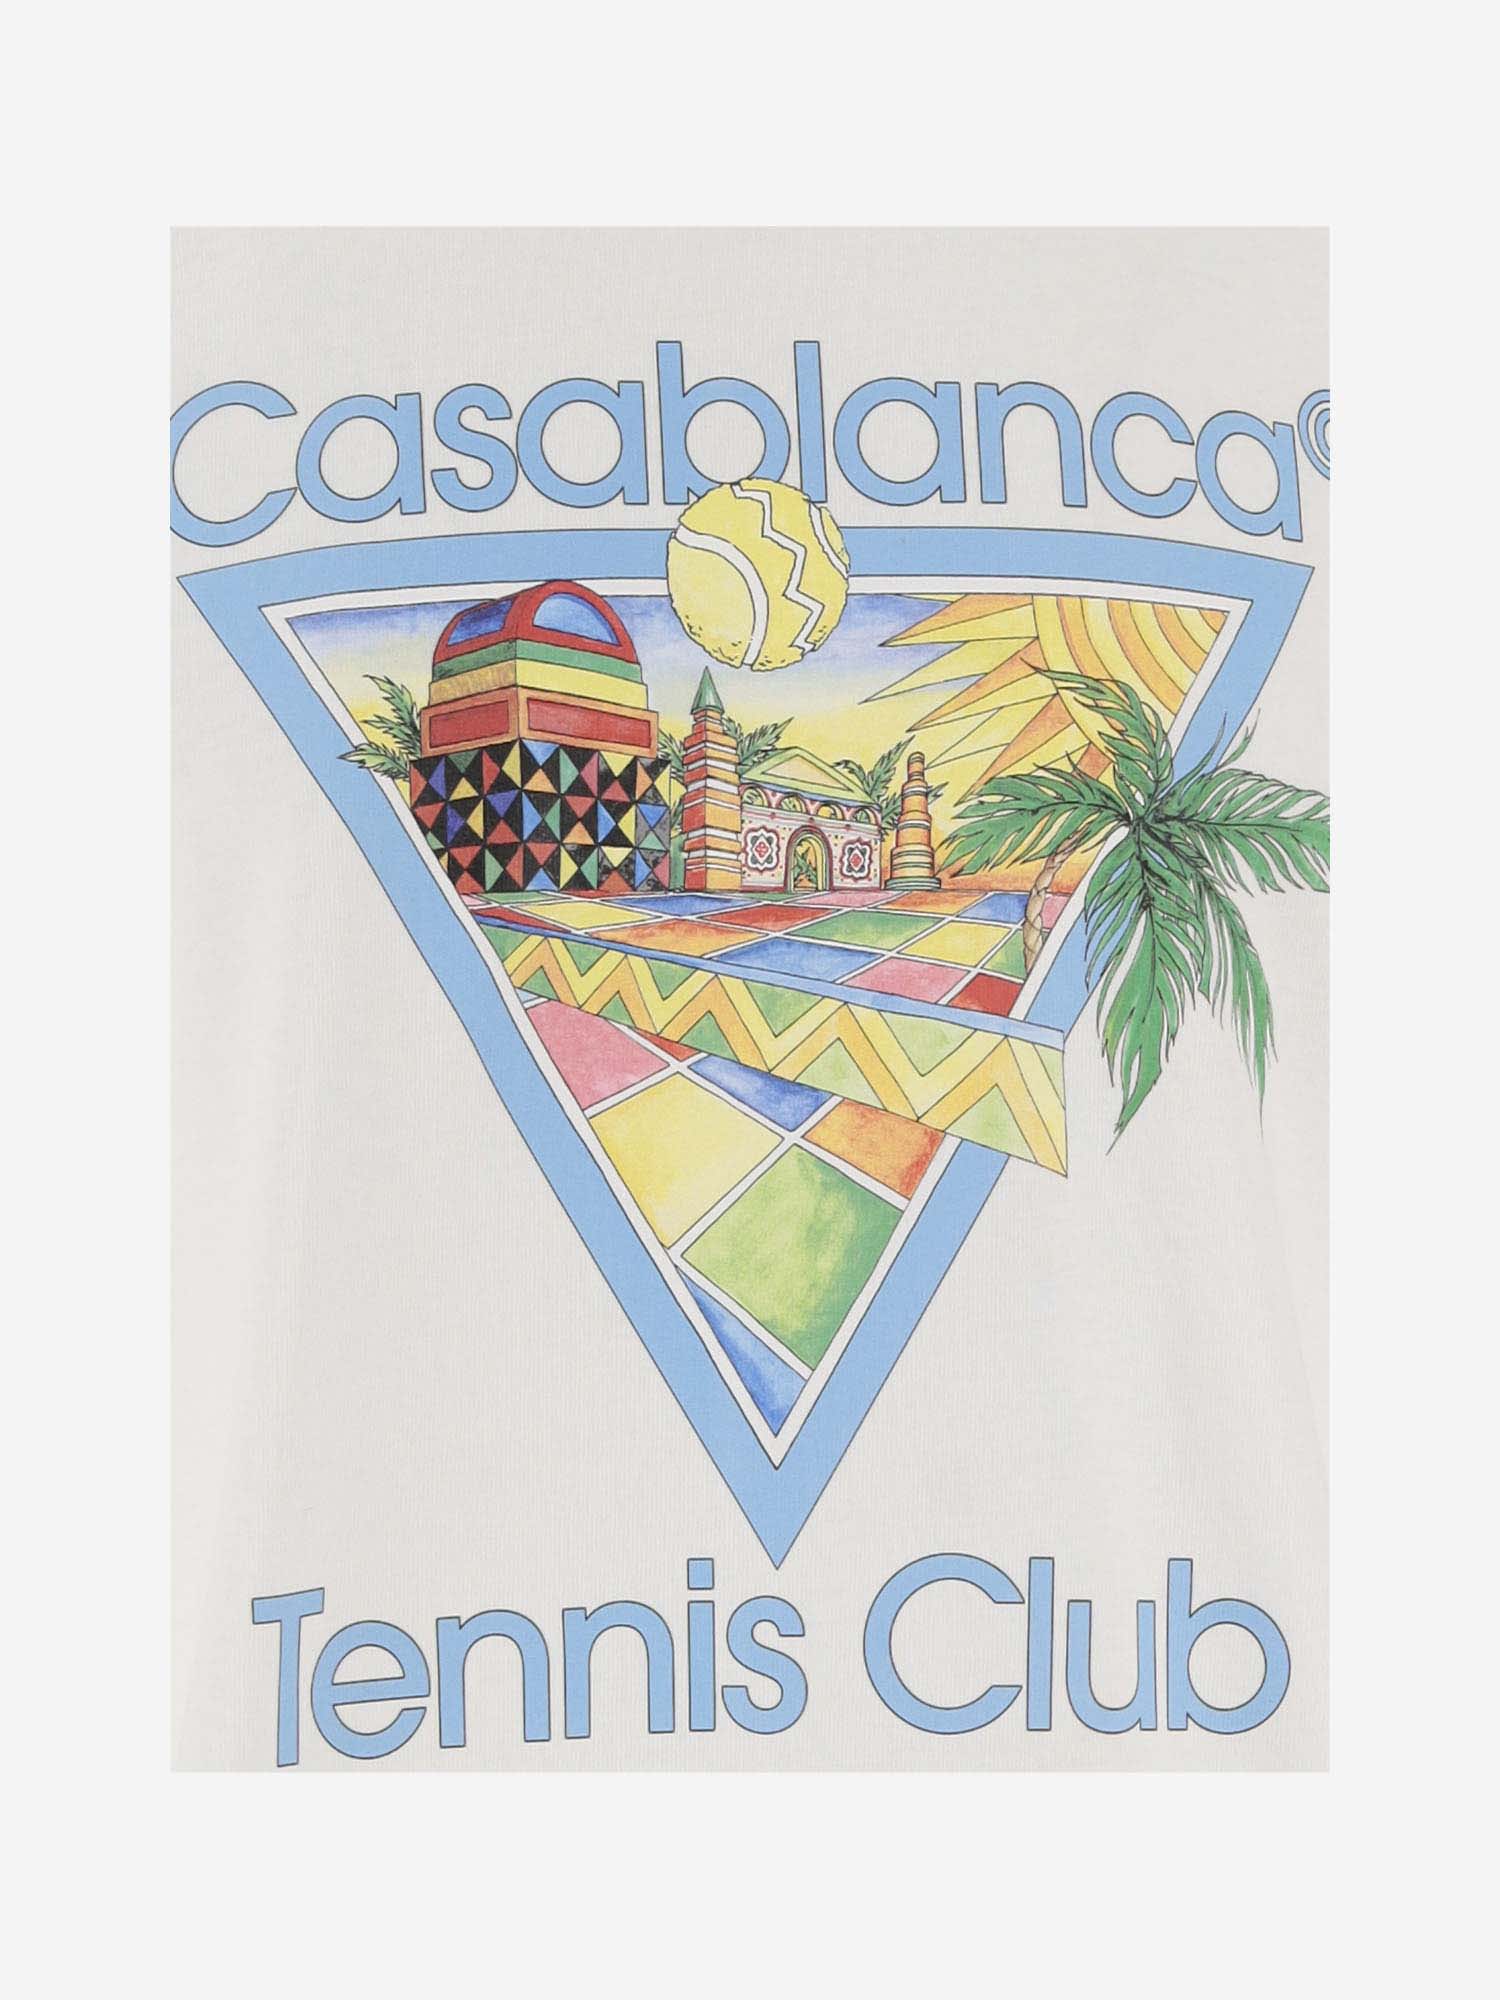 Shop Casablanca T-shirt Afro Cubism Tennis Club In White